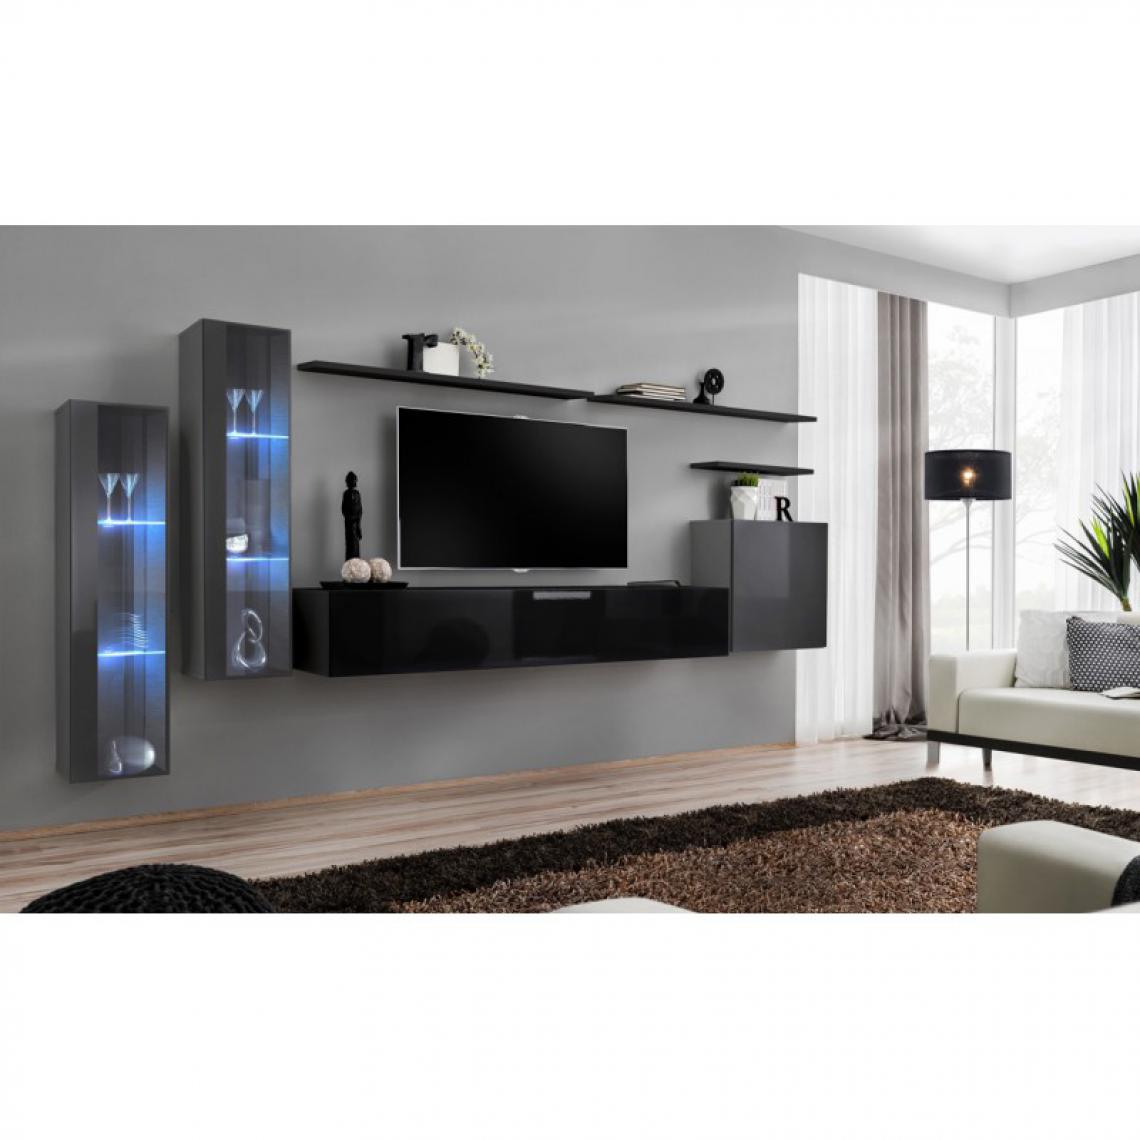 Ac-Deco - Meuble TV Mural Design Switch XI 330cm Gris & Noir - Meubles TV, Hi-Fi